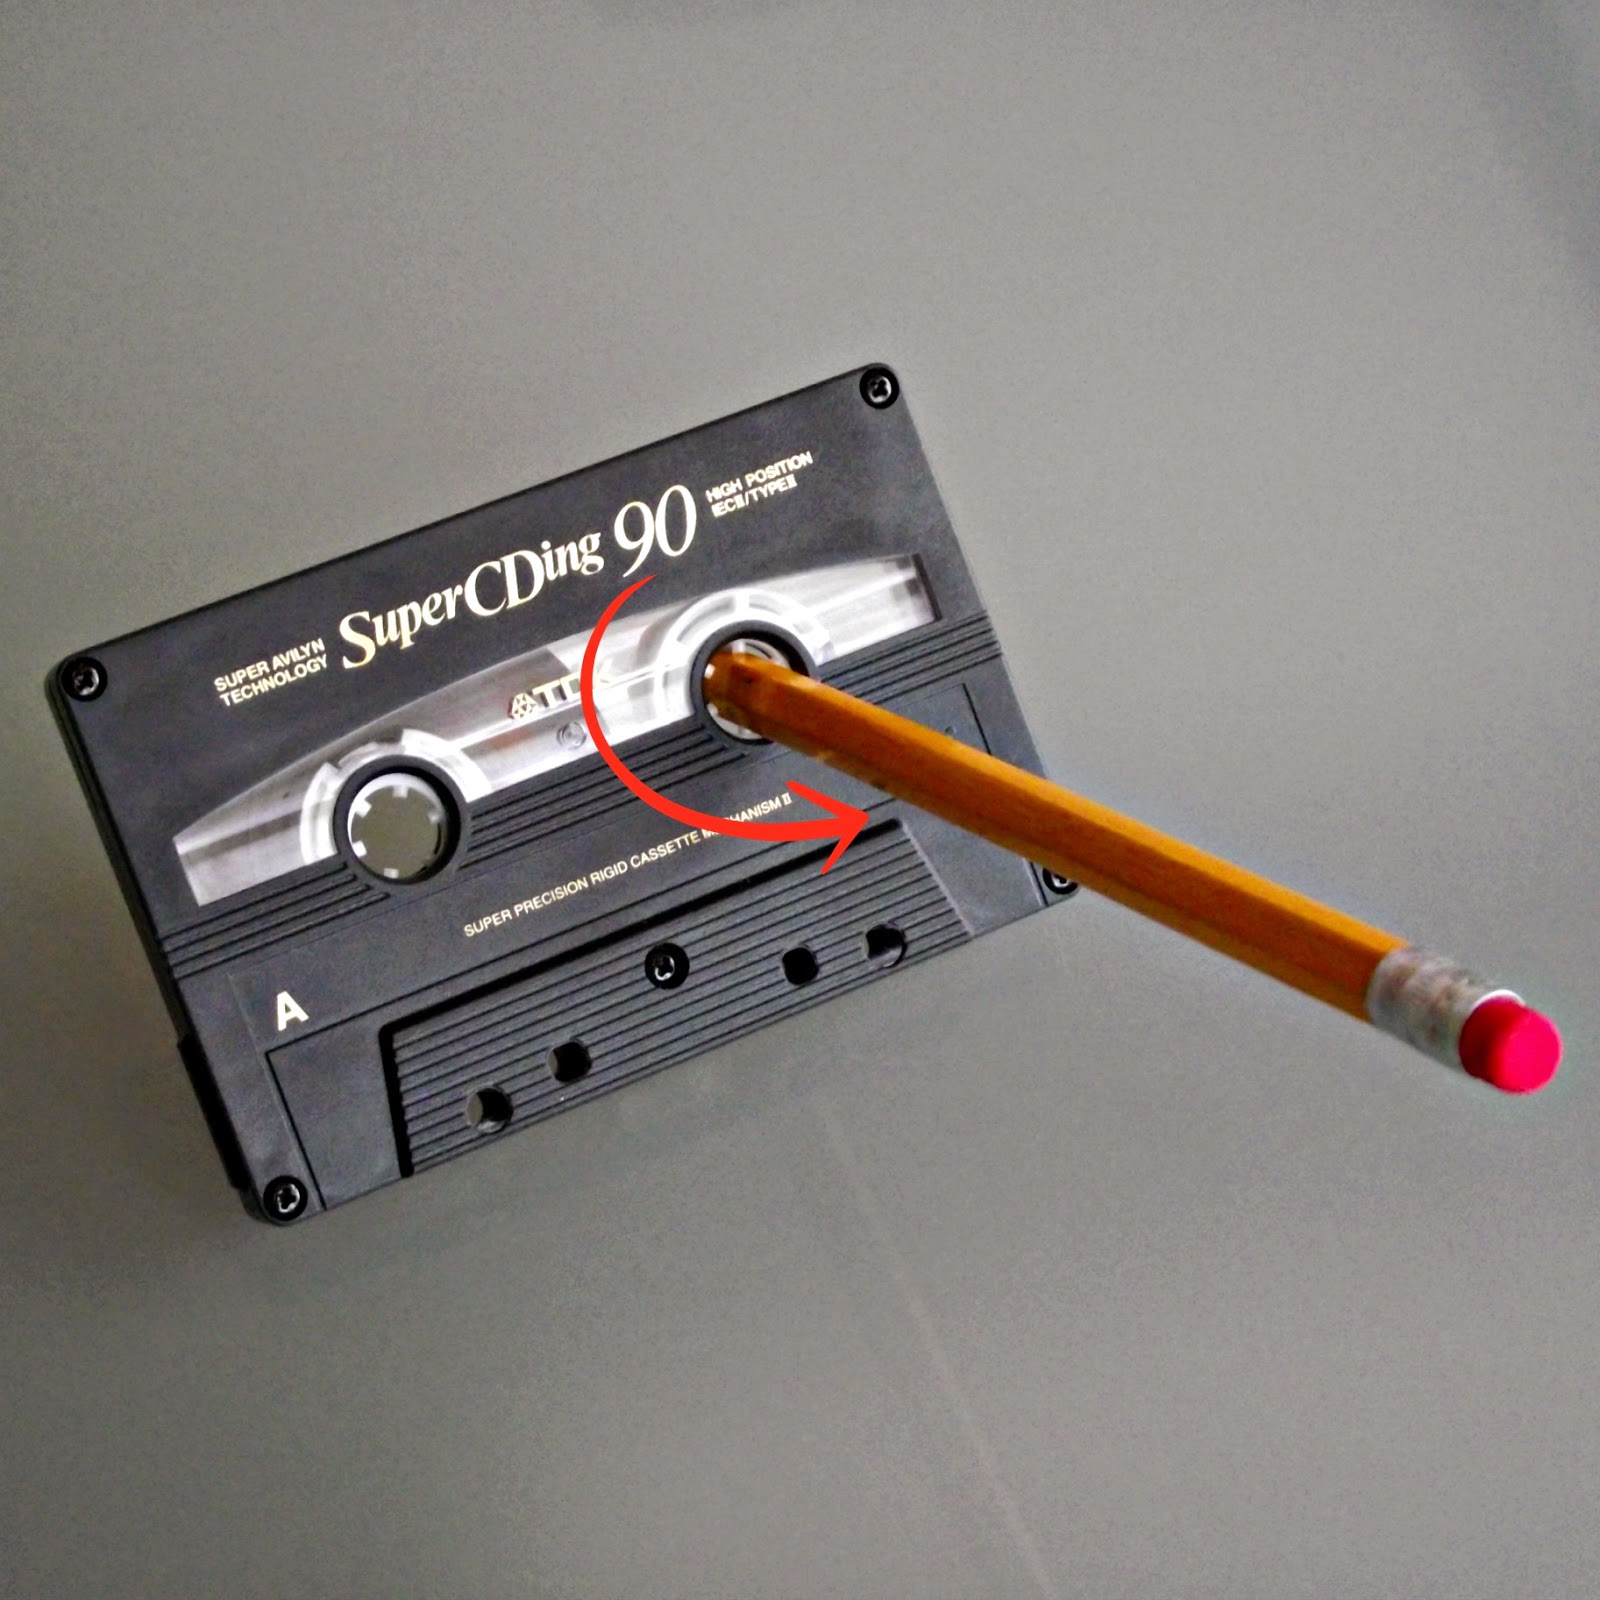 Cassette+pencil+2.jpg